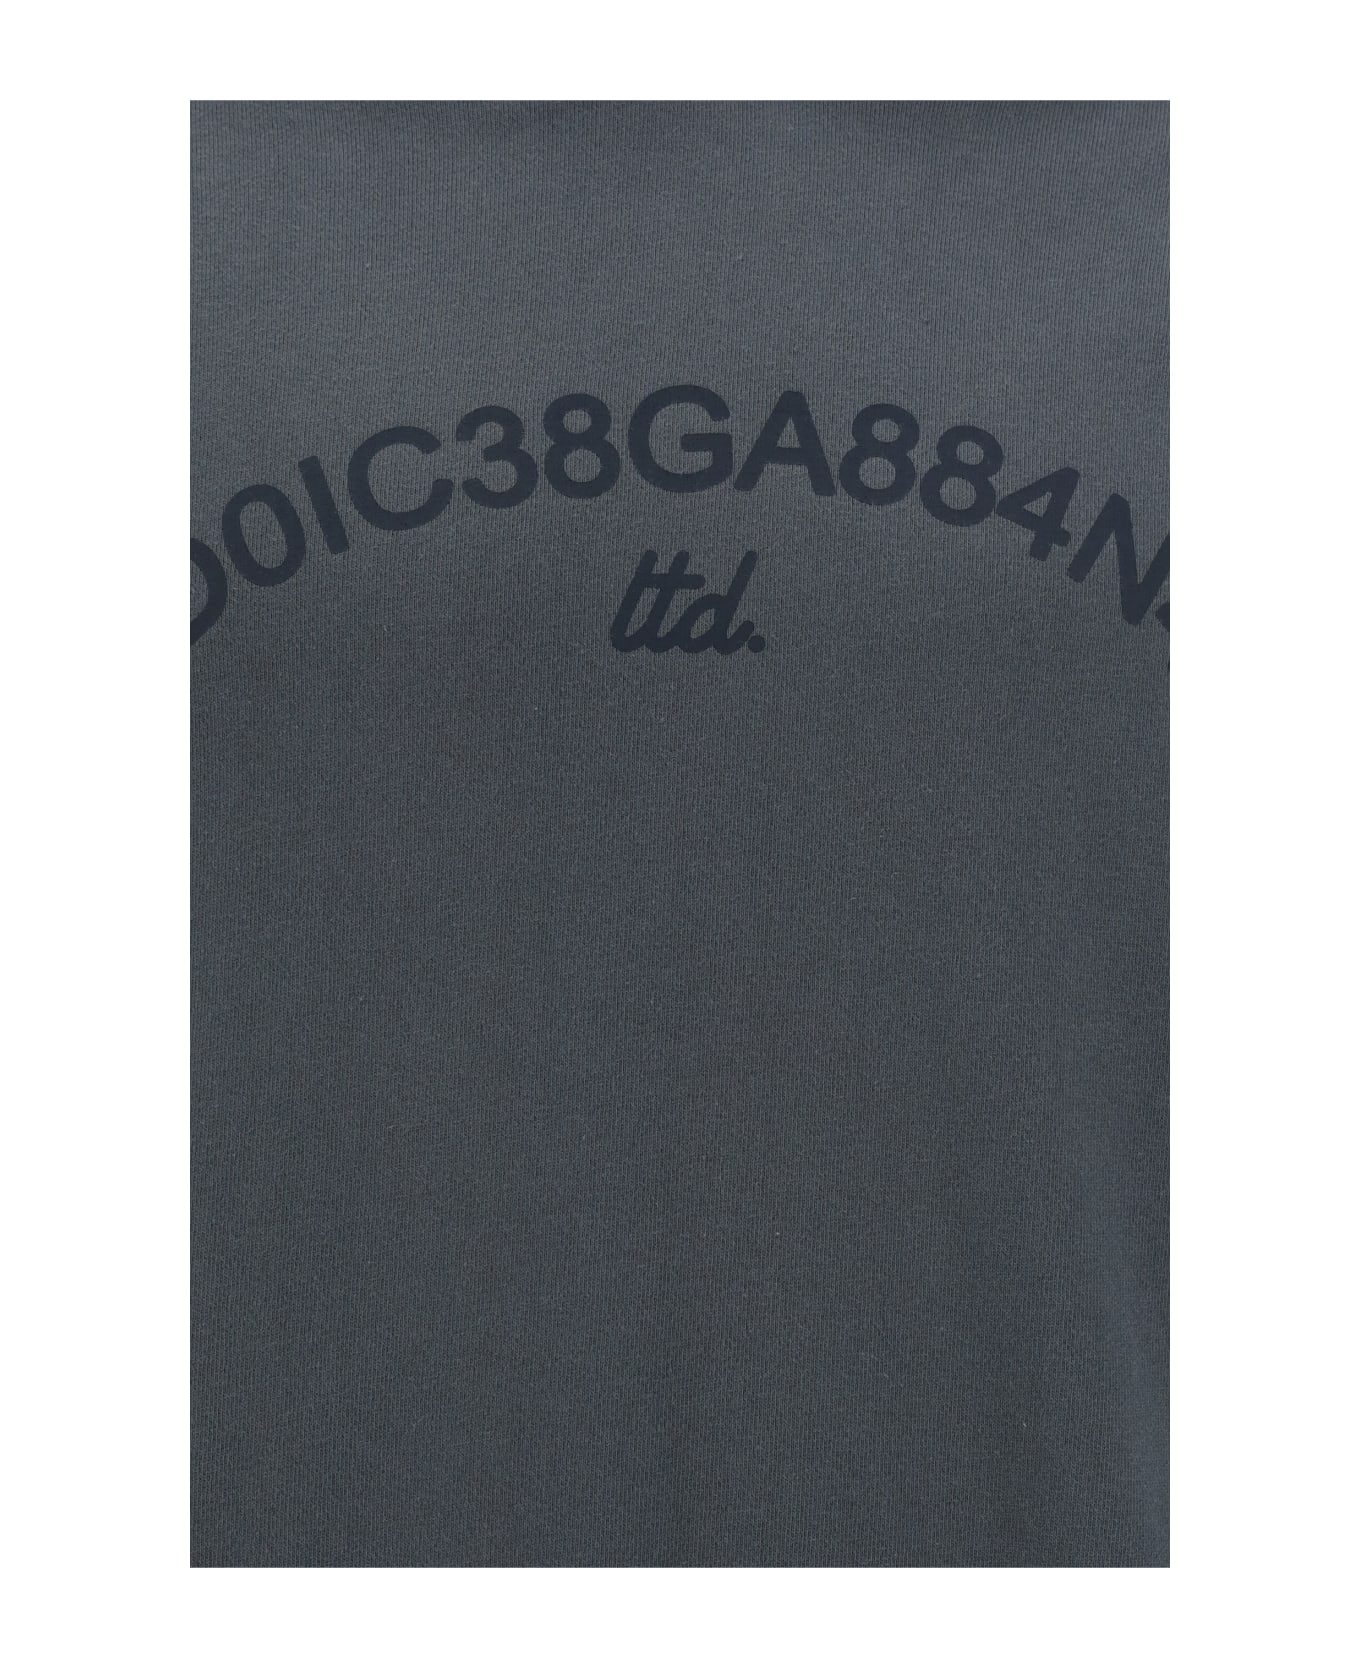 Dolce & Gabbana Sweatshirt With Logo - Grigio